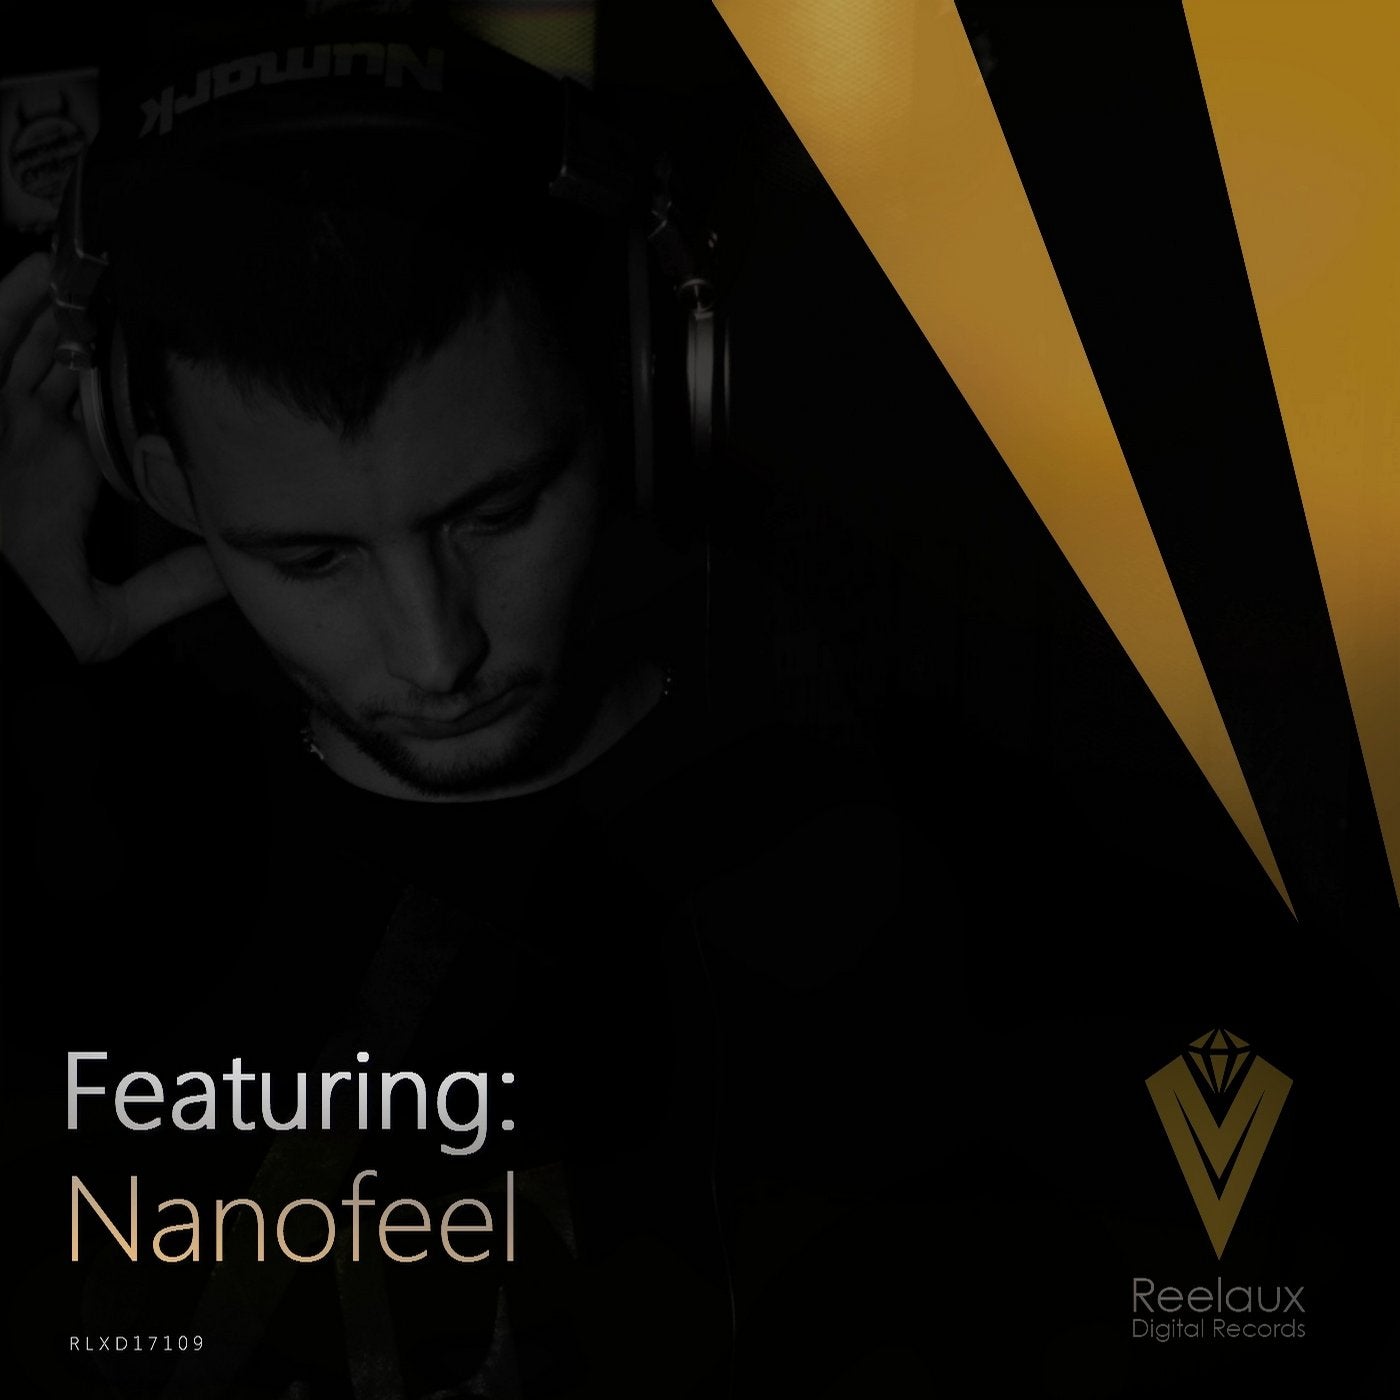 Featuring: Nanofeel